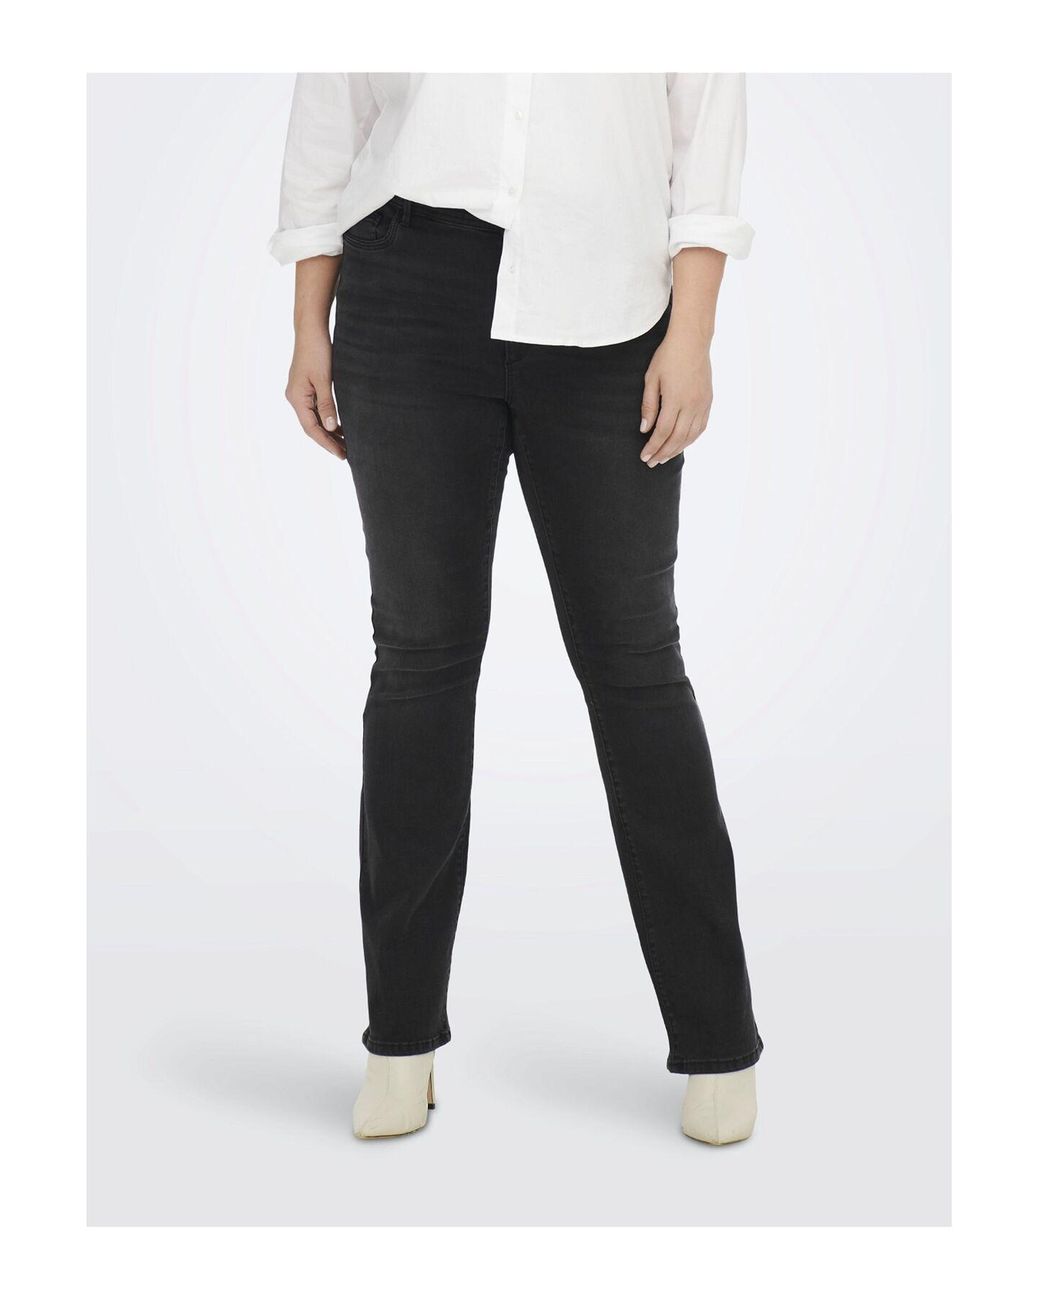 Carmakoma carsally | jeans Only flared DE curvy Schwarz waist Lyst Ausgestellt in high